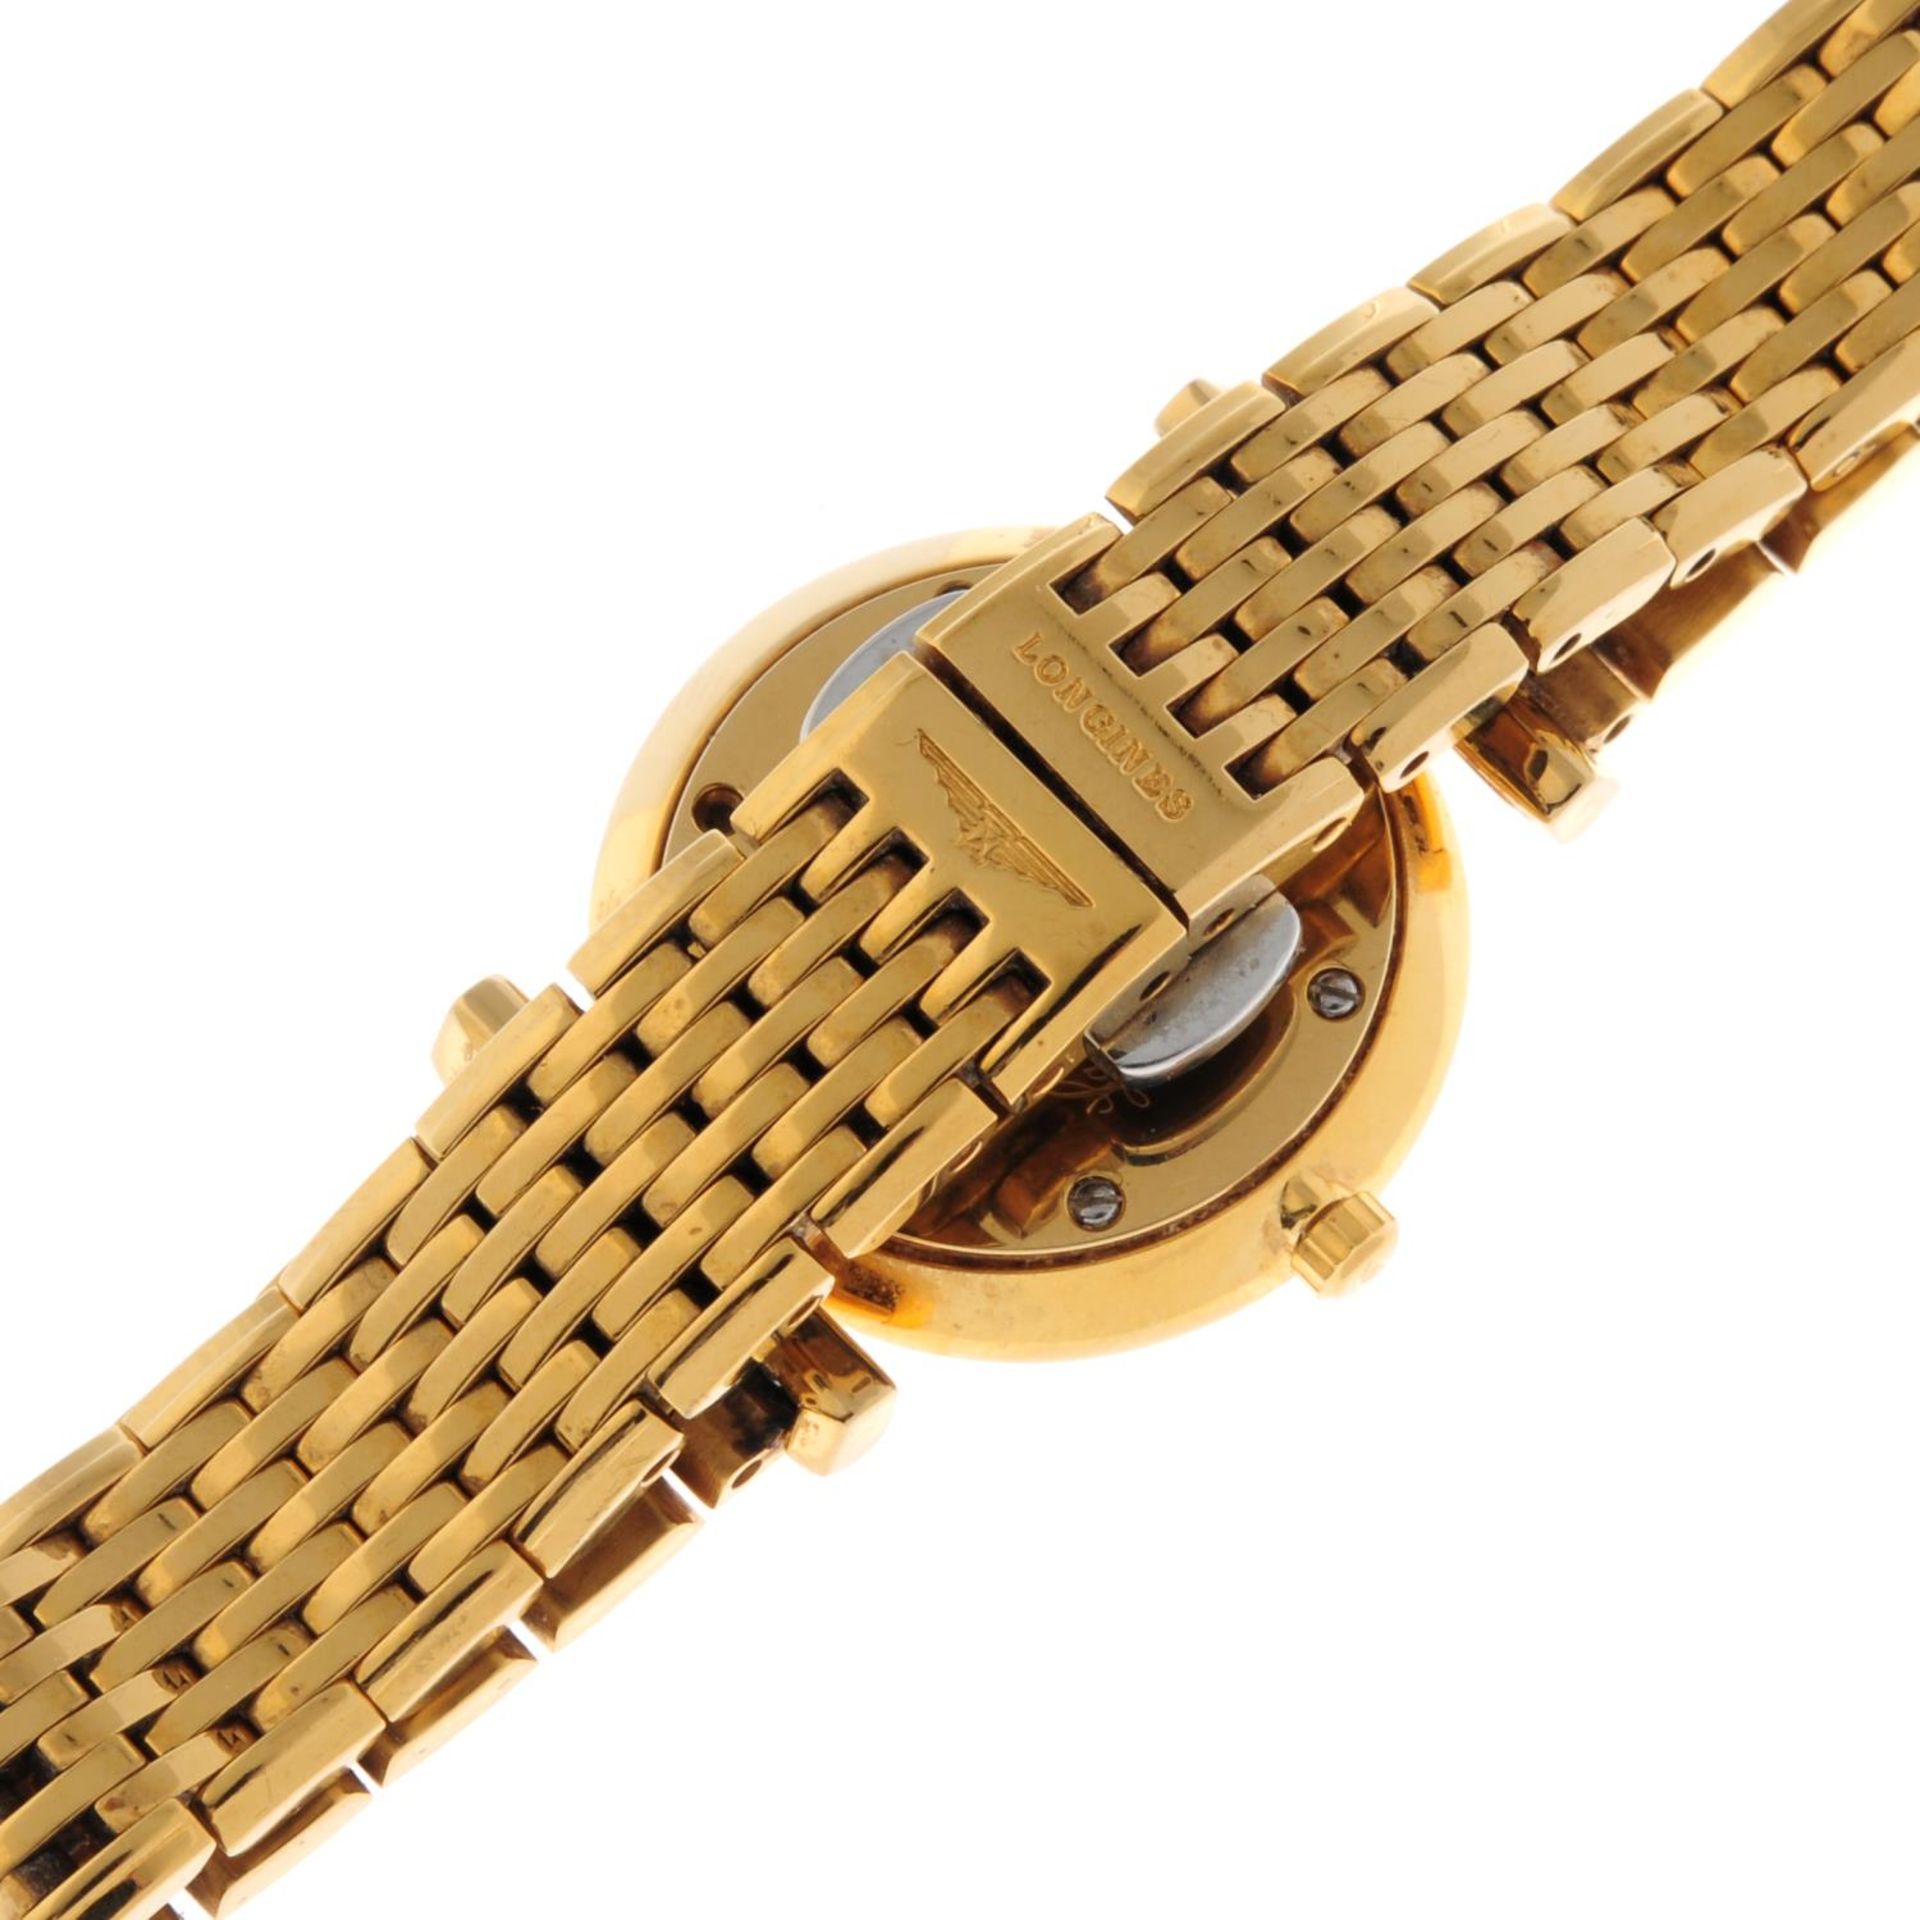 LONGINES - a La Grande Classique bracelet watch. - Image 2 of 4